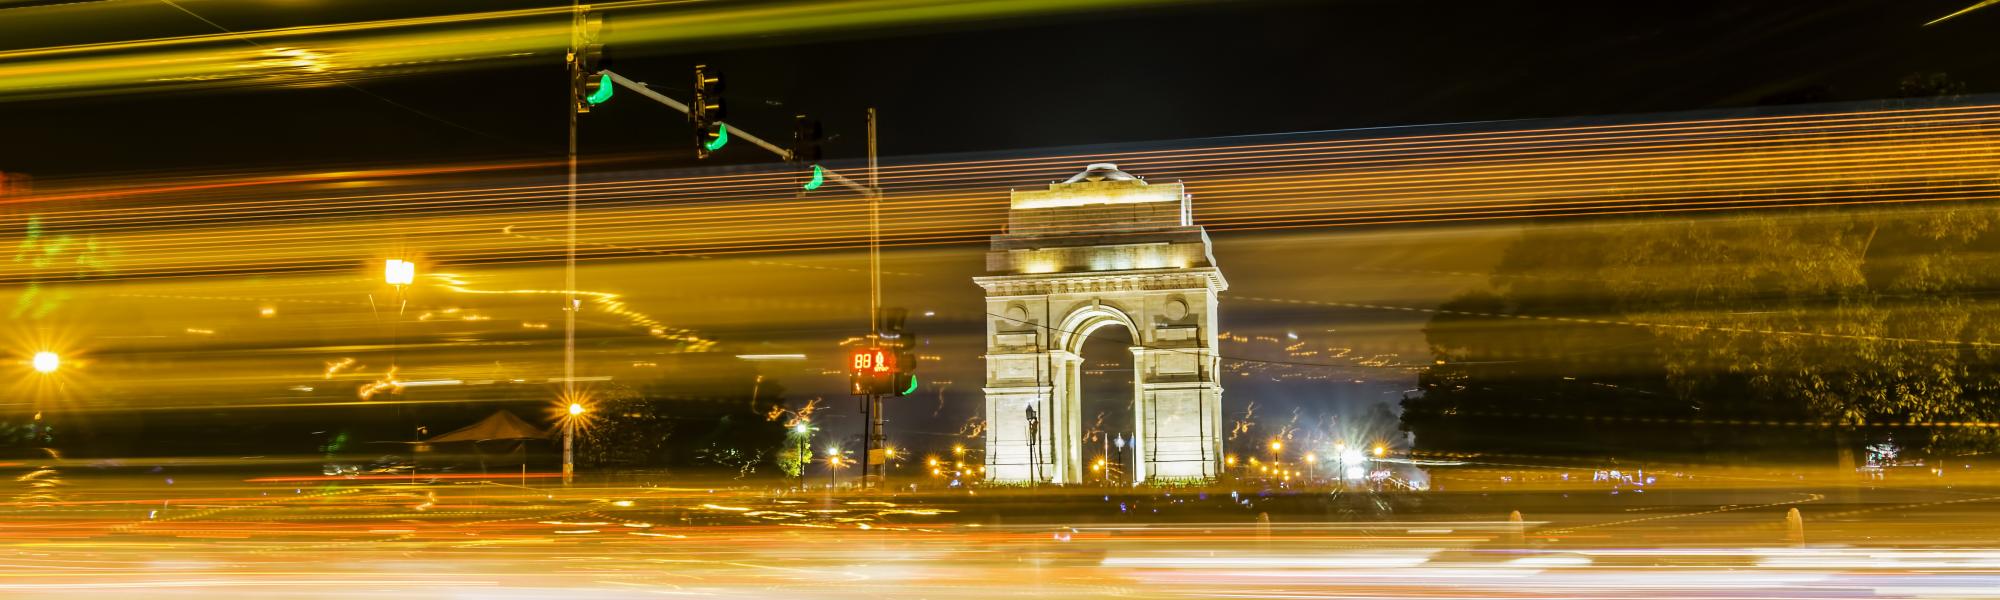 India gate at night New Delhi 